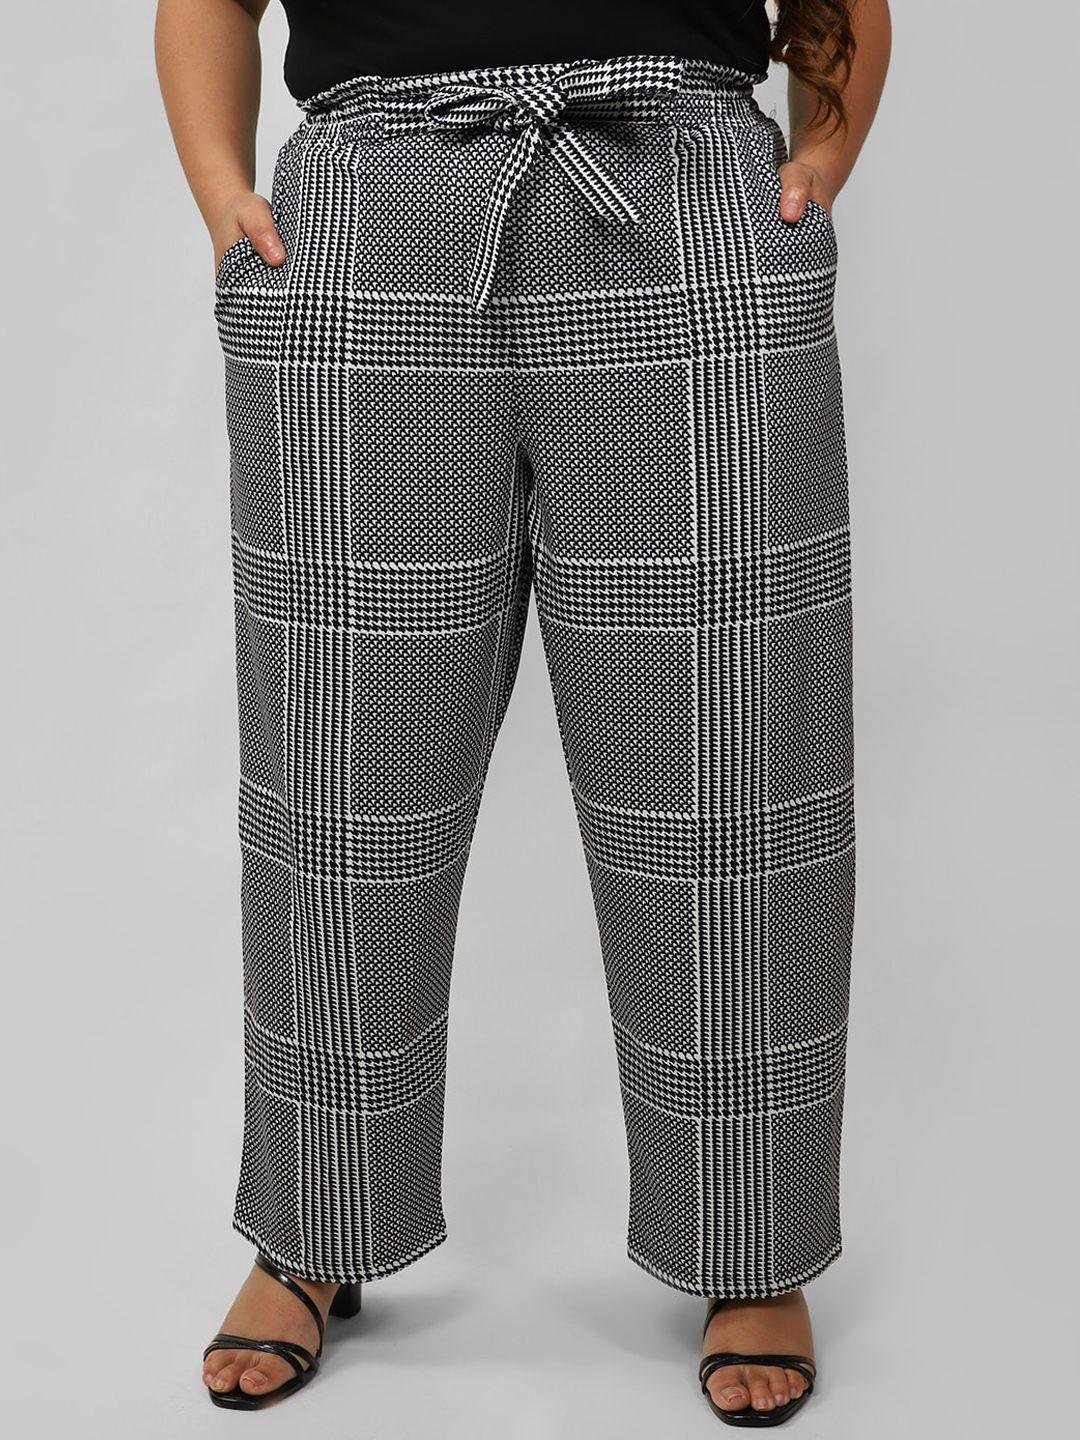 amydus-women-plus-size-grey-checked-trousers